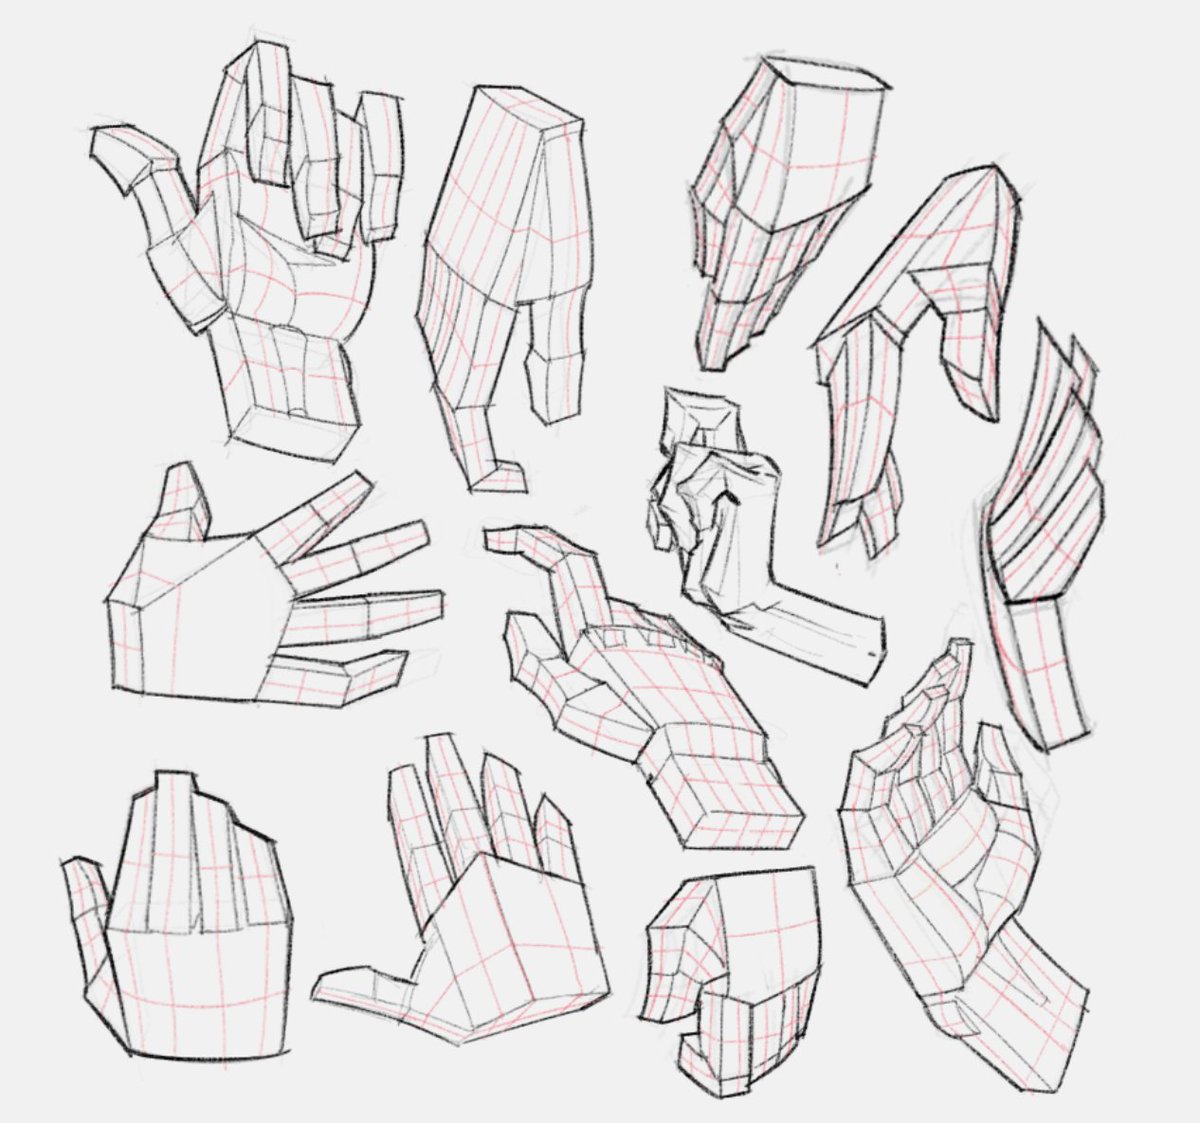 hands sketch
#sketch #drawingart #study #練習 #art #絵 #絵描きさんと繋がりたい #figuredrawing #gesturedrawing #gesture #poses #hands